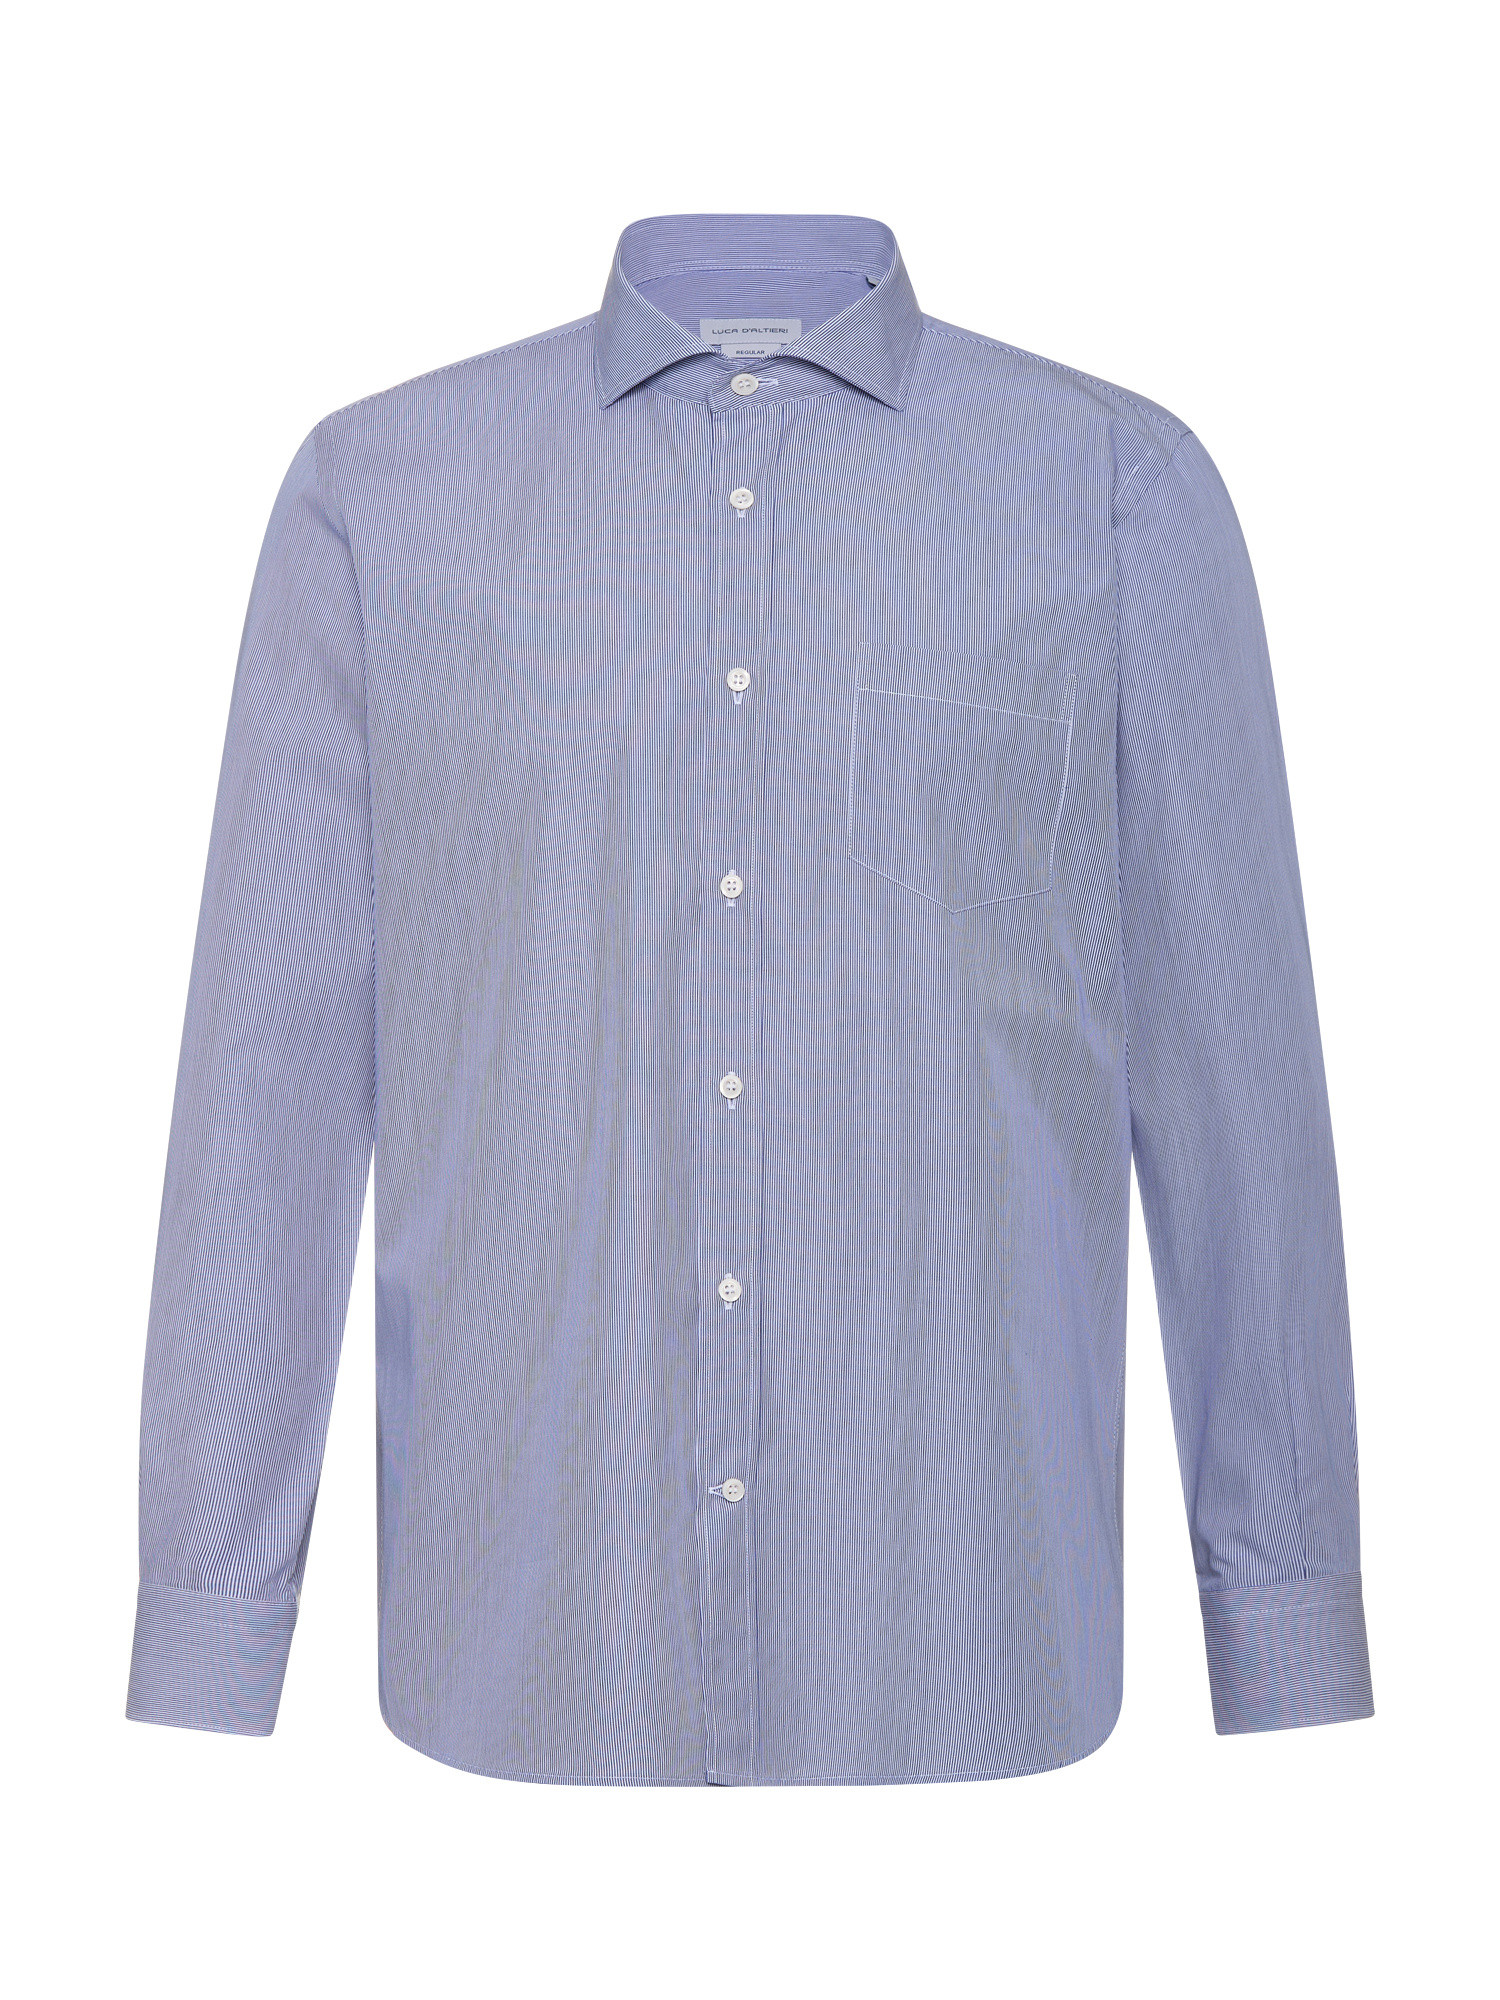 Luca D'Altieri - Regular fit casual shirt in pure cotton poplin, Blue, large image number 1